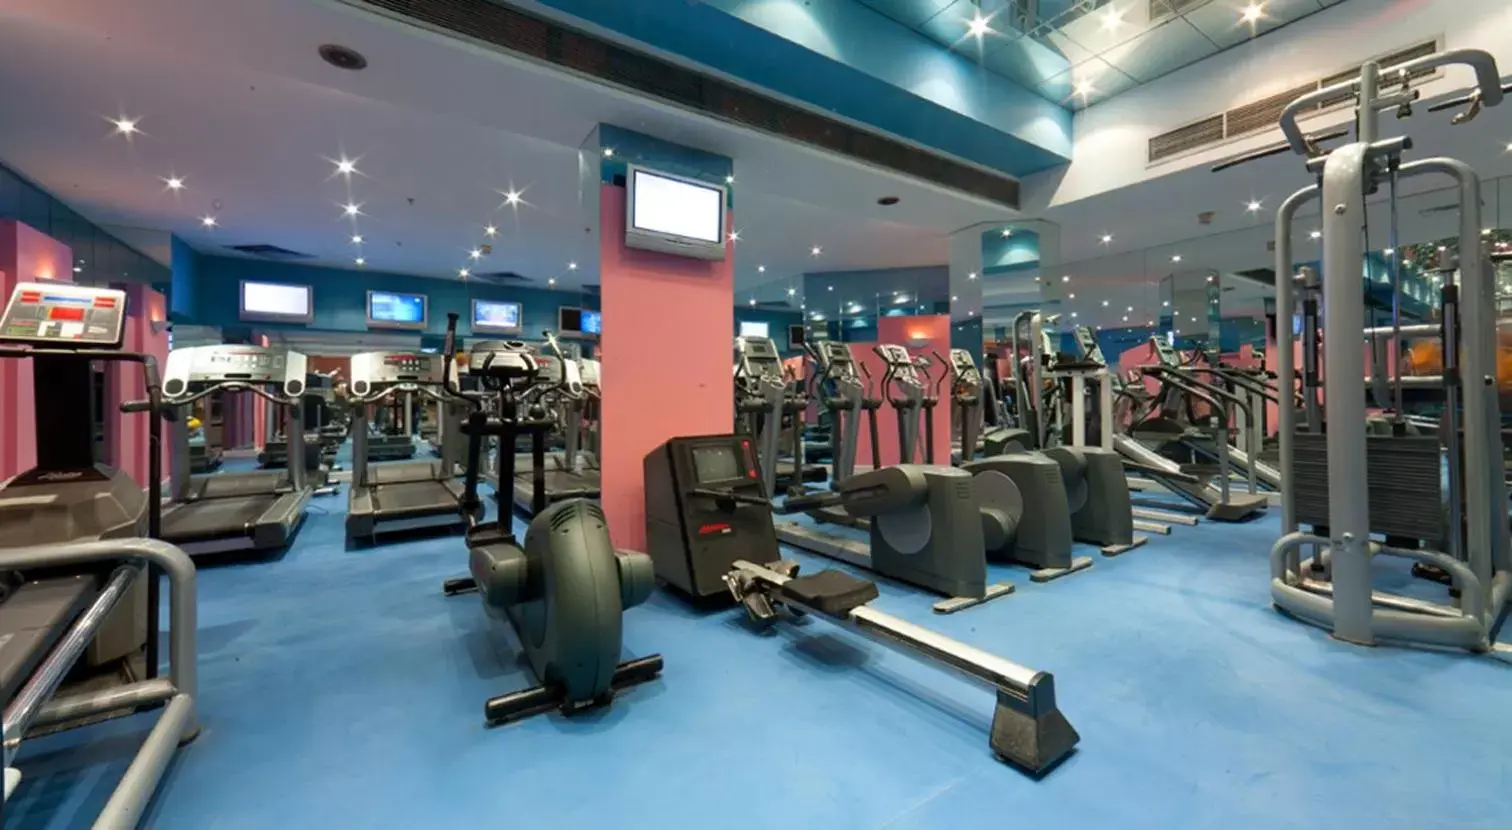 Fitness centre/facilities, Fitness Center/Facilities in Sonesta Hotel Tower & Casino Cairo